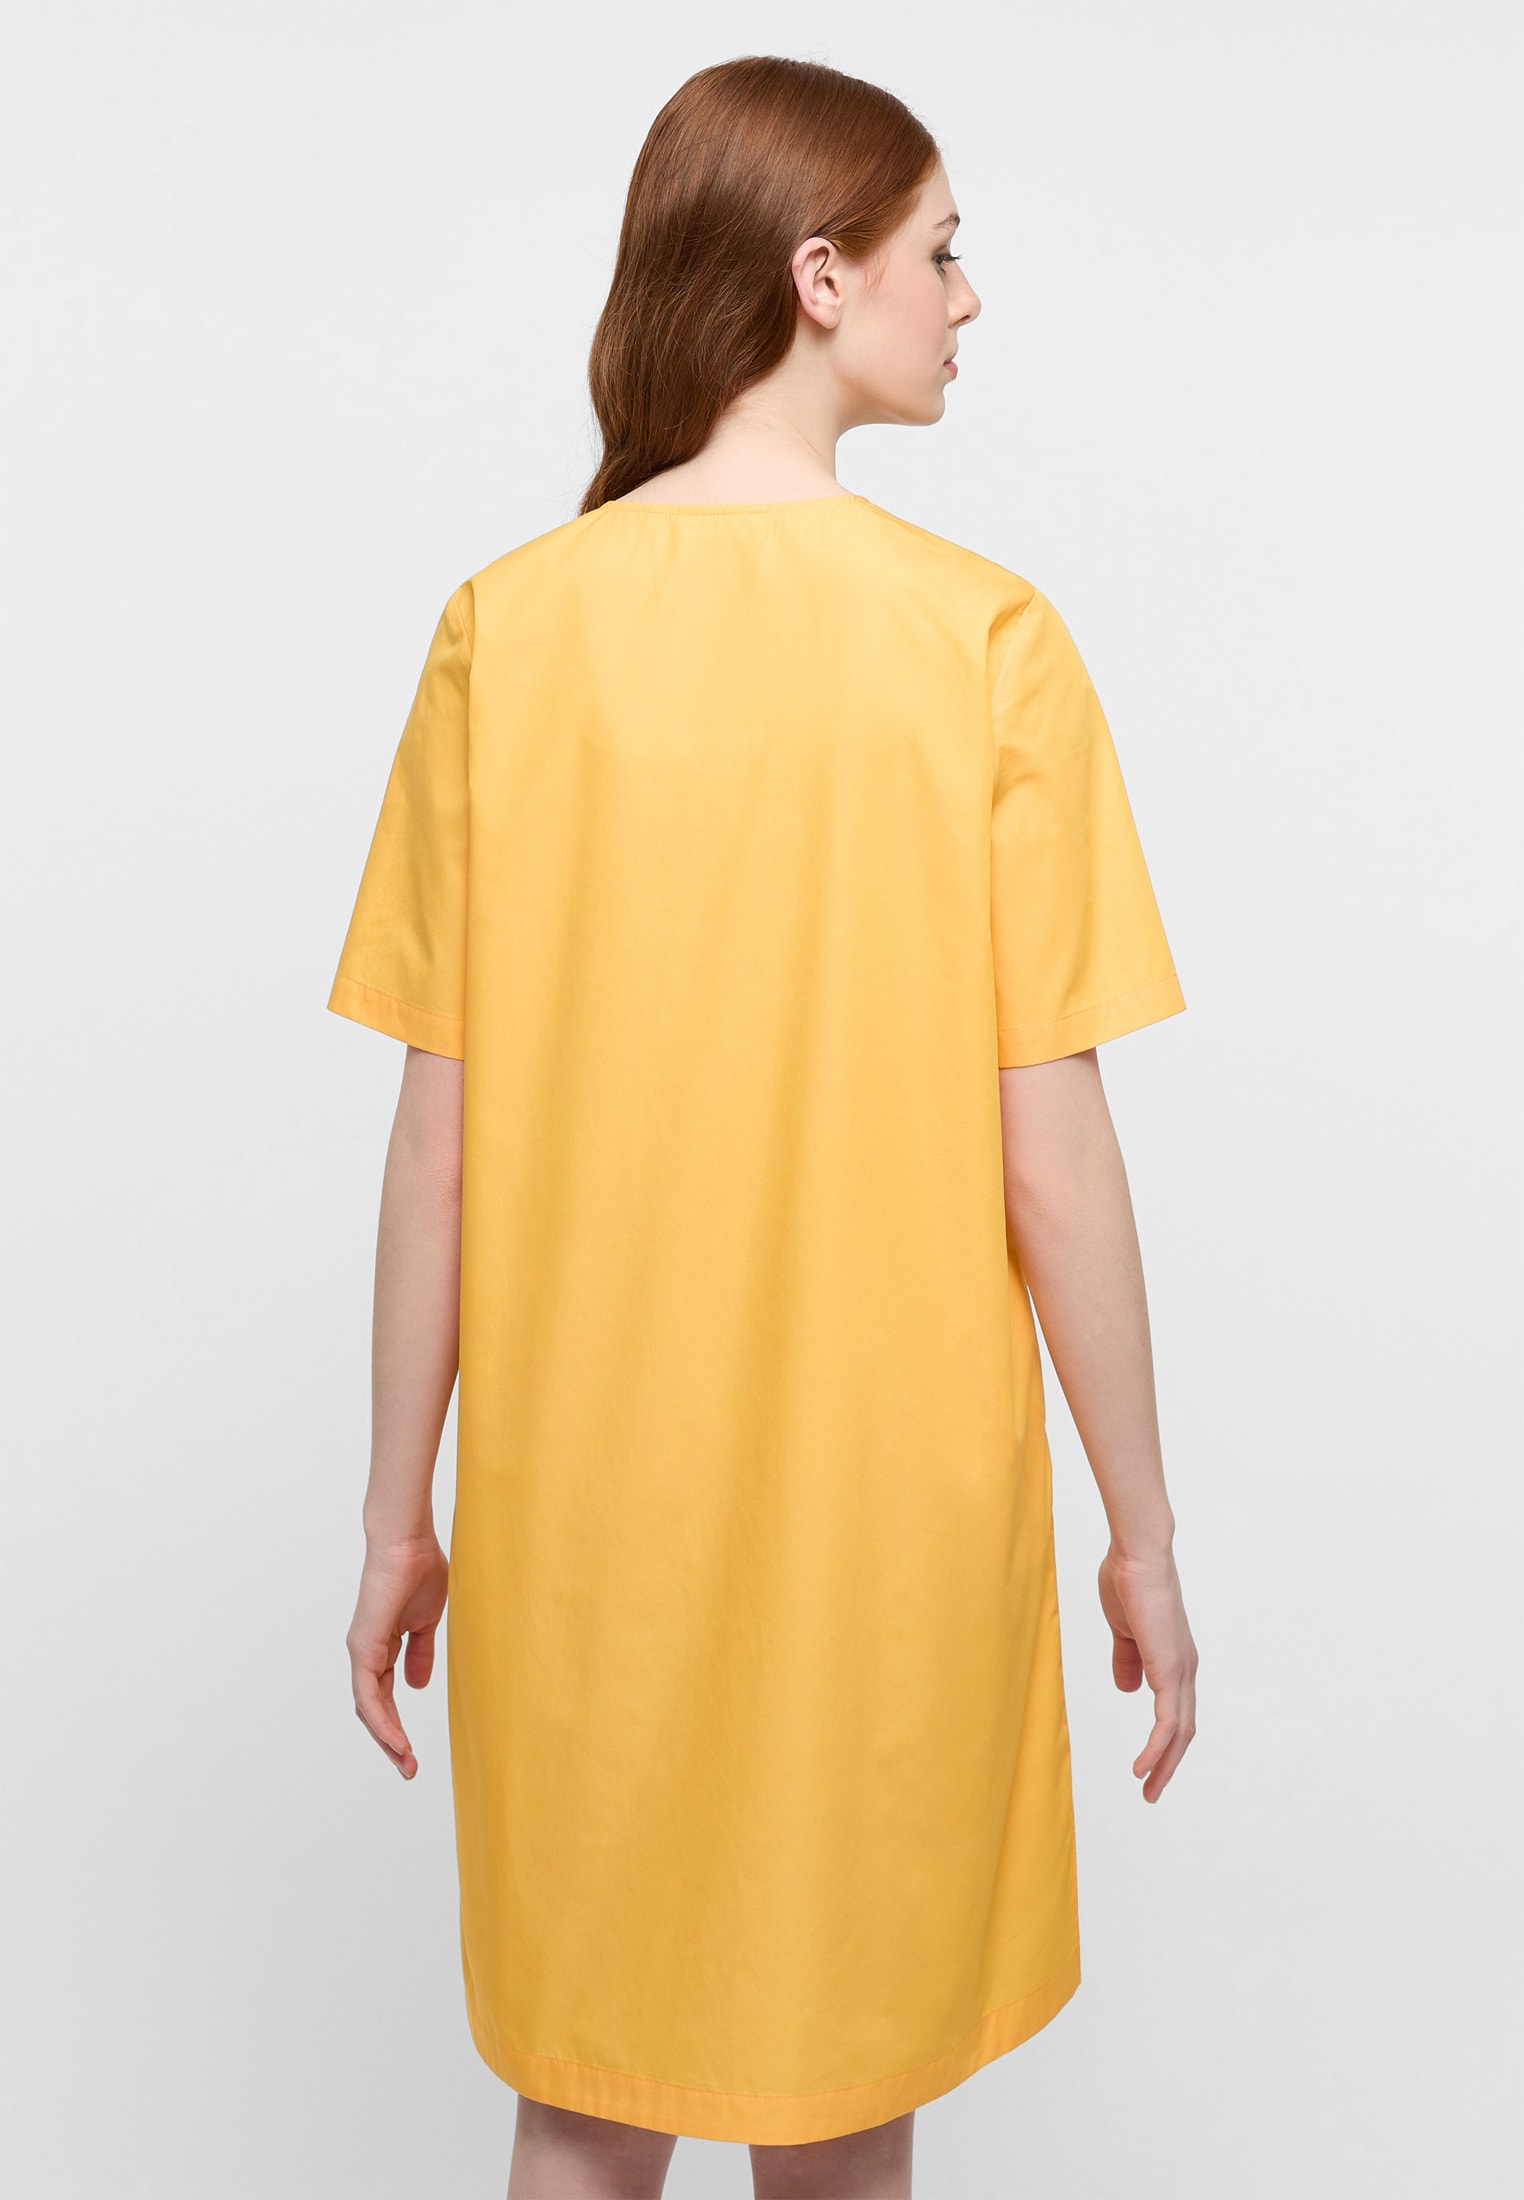 Shirt dress in | 42 | | plain | sleeve mandarin 2DR00211-08-21-42-1/2 mandarin short